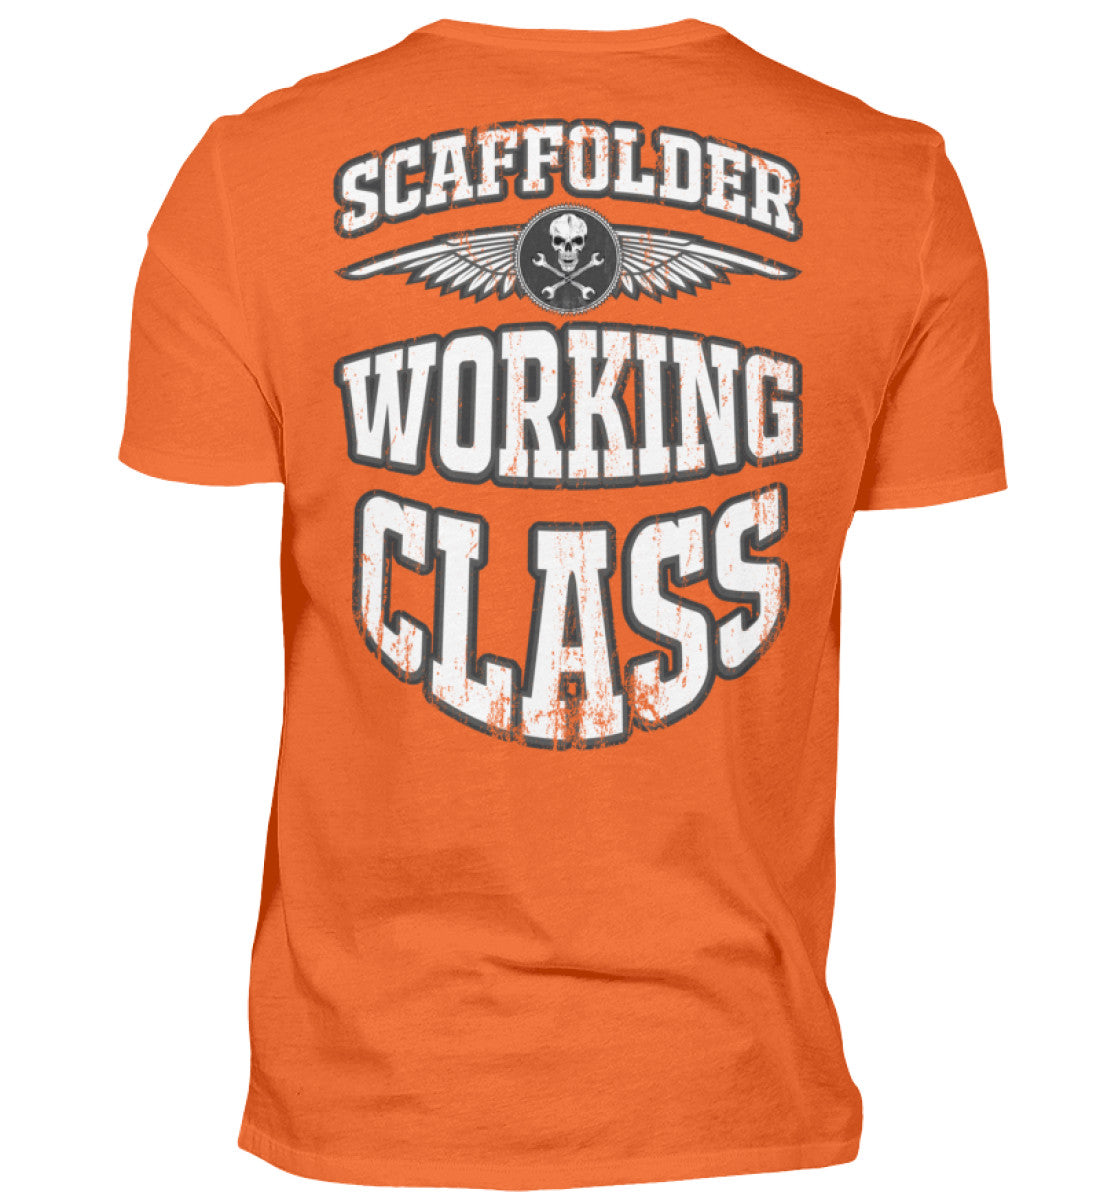 Scaffolder Working Class  - Gerüstbauer Shirt €24.95 Gerüstbauer - Shop >>